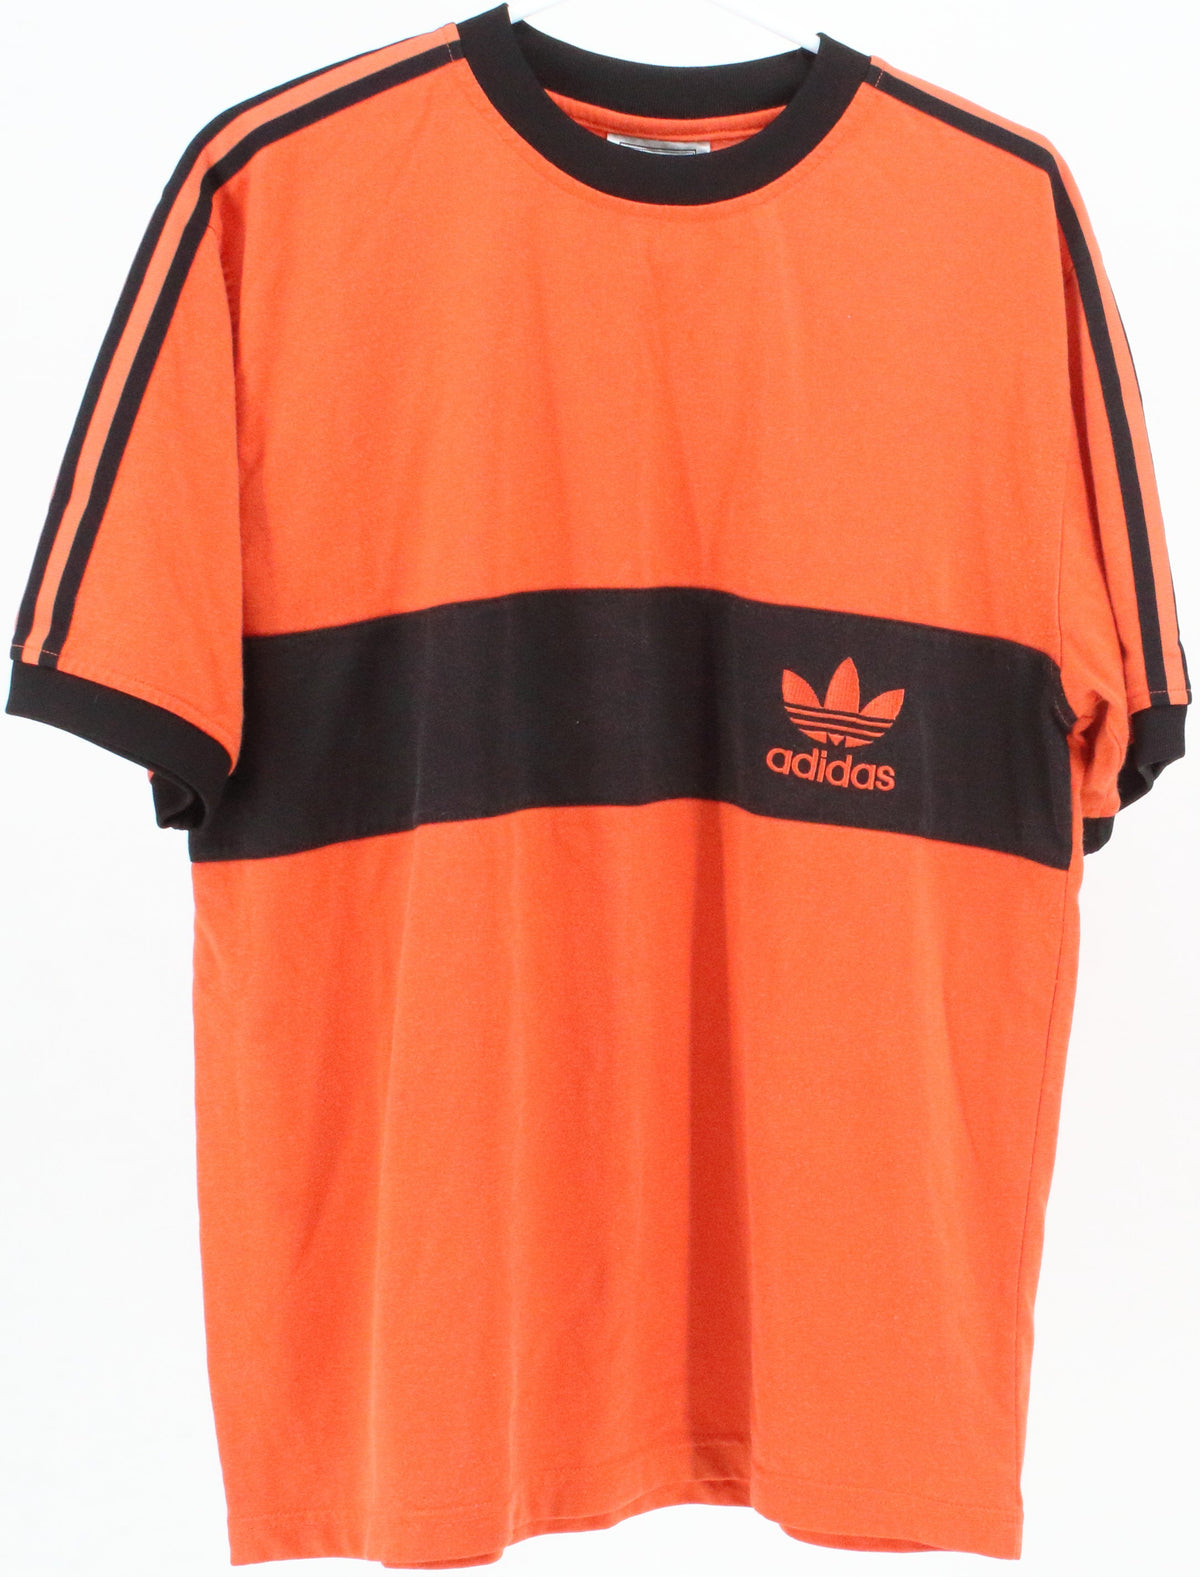 Adidas Orange and Black T-Shirt